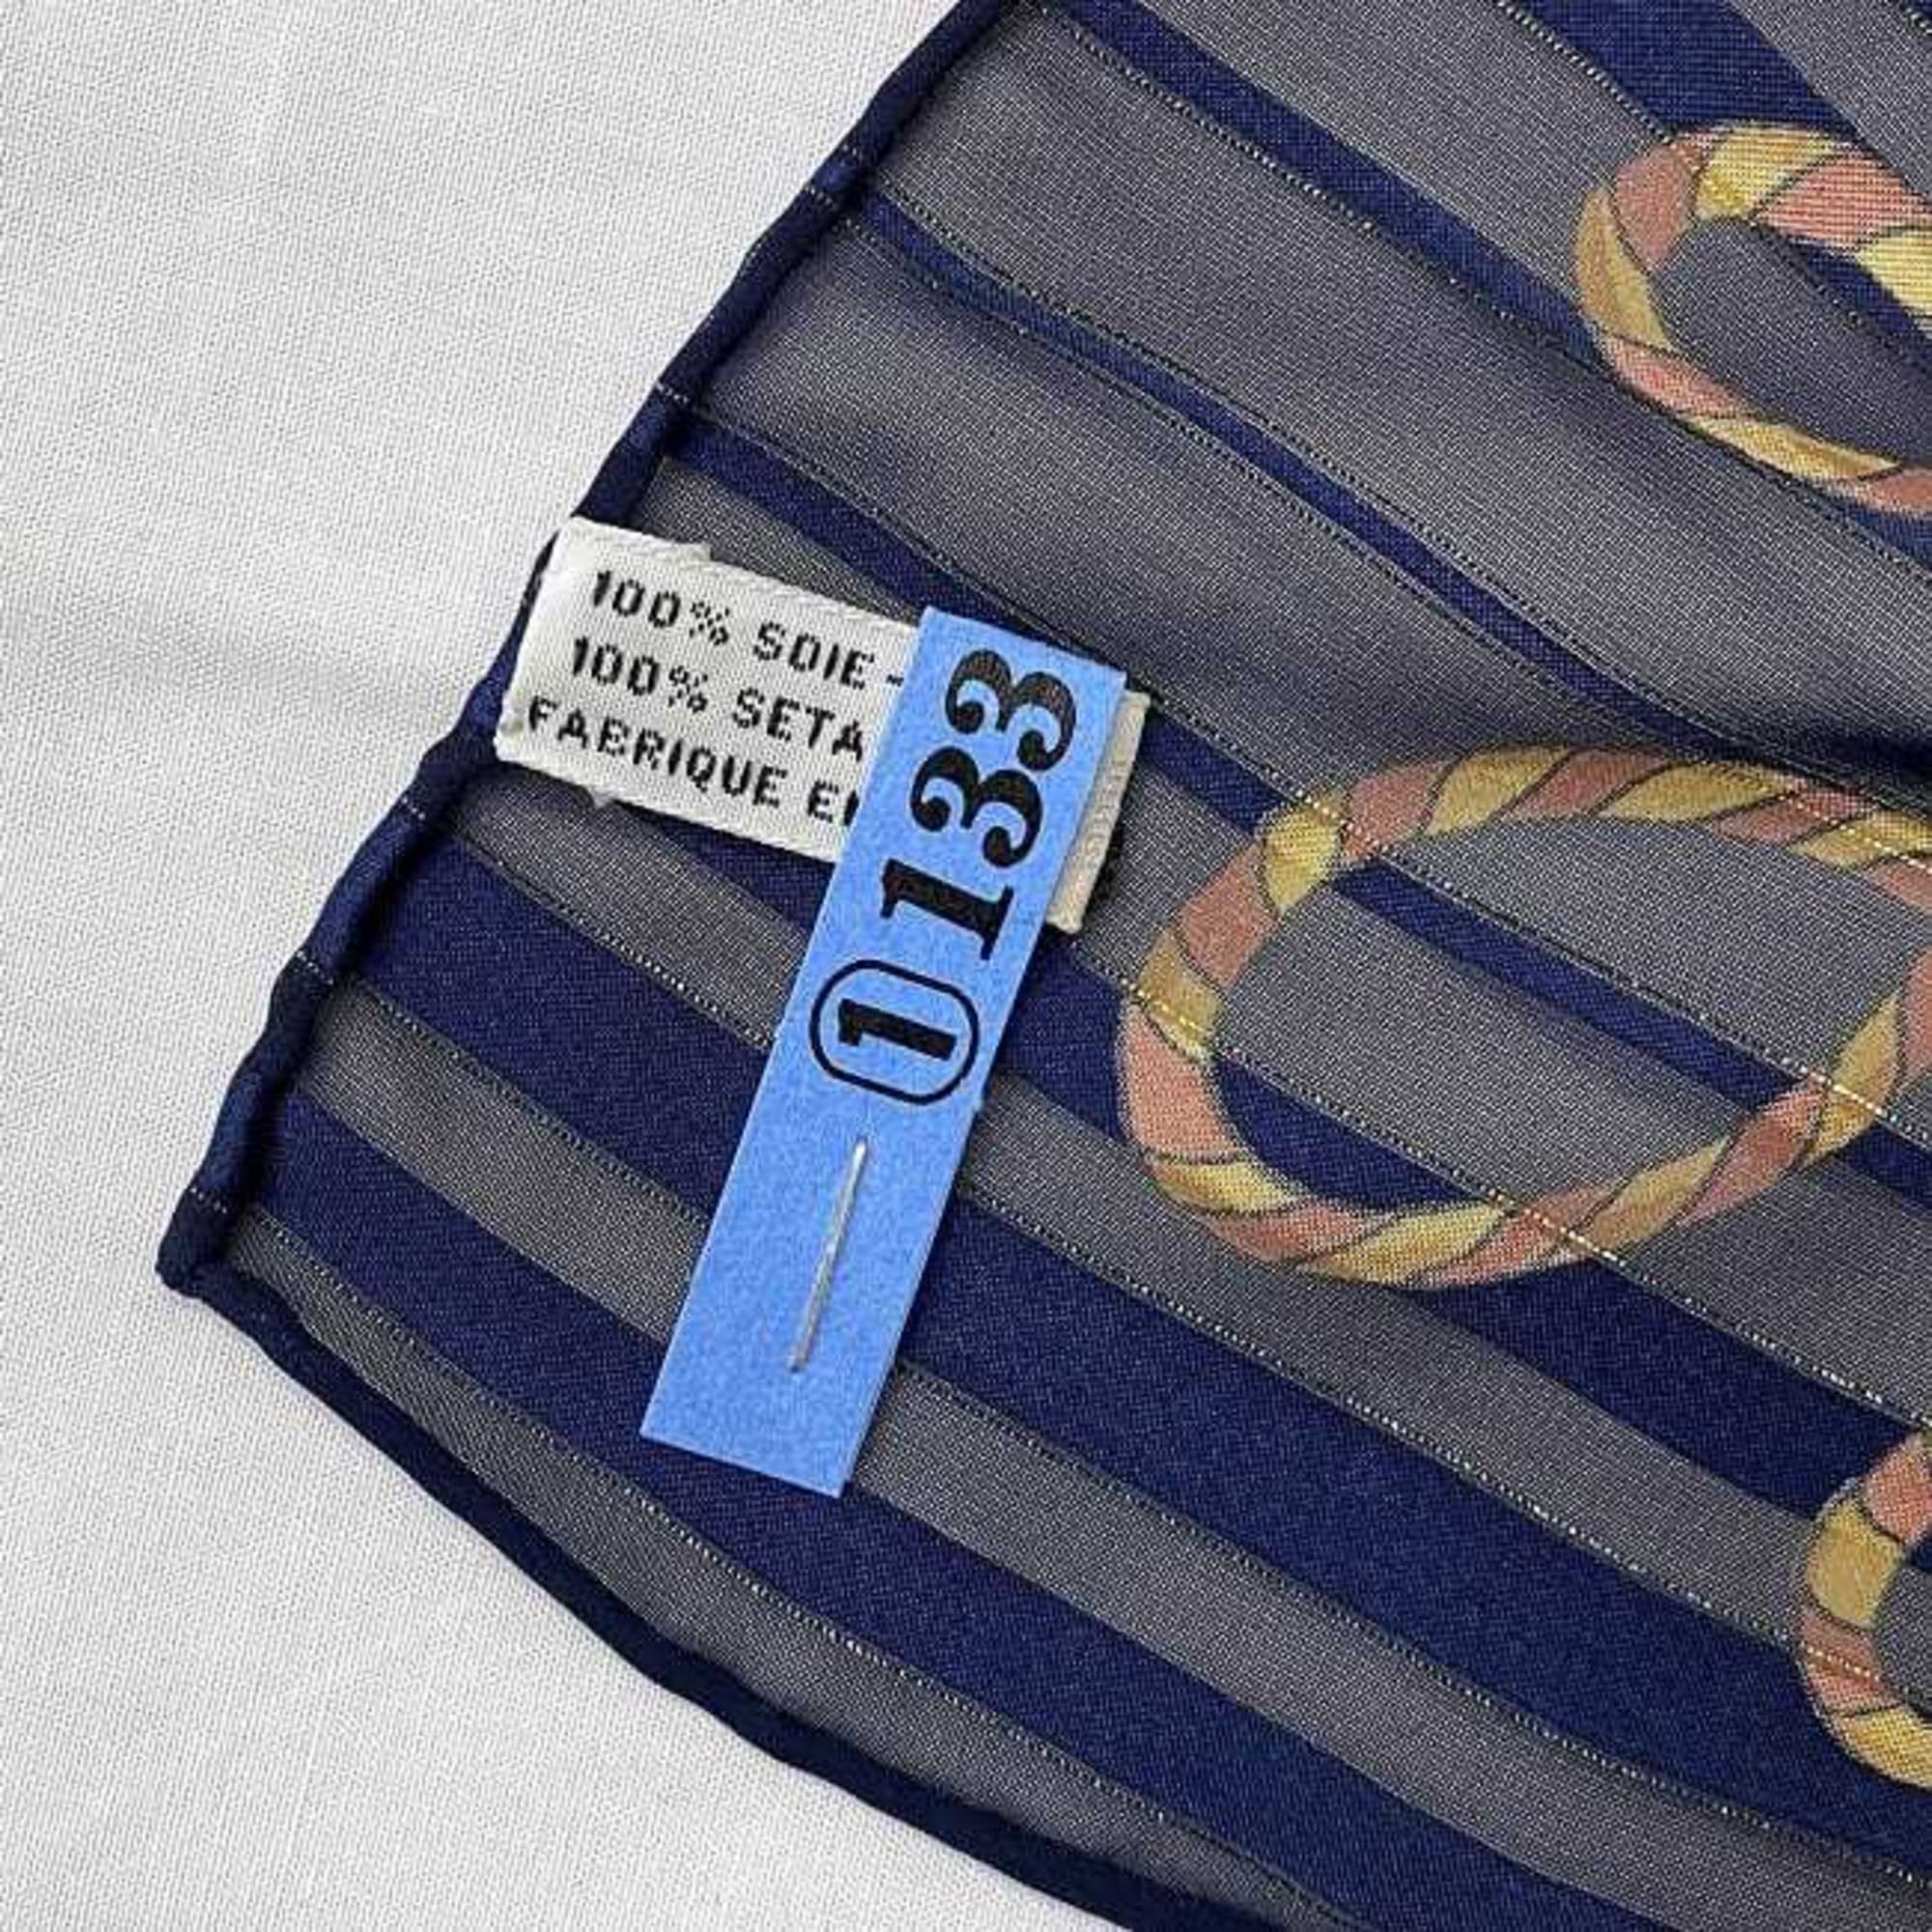 Hermes Scarf Muffler Carre 90 Navy Blue Gold ec-20439 100% Silk HERMES See-through Thread Stripe Tassel Leopard Print